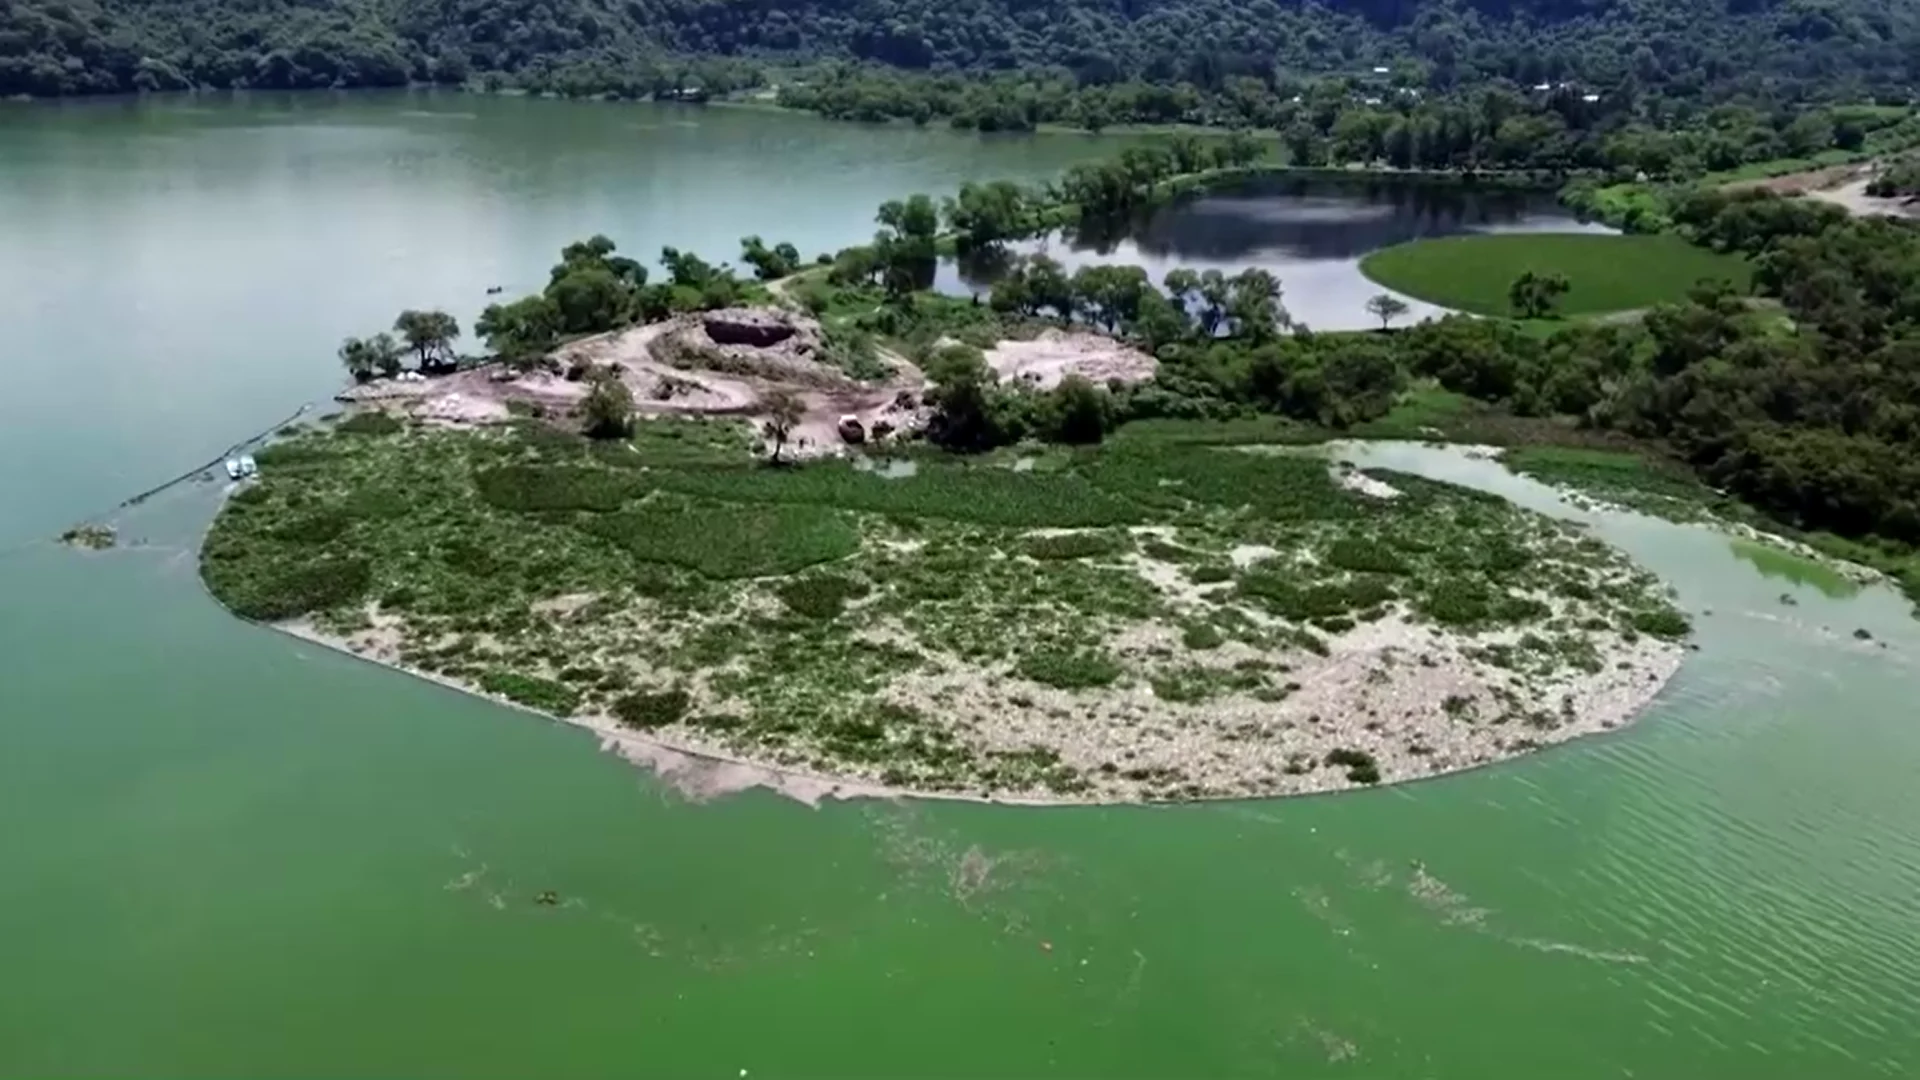 Trash 'island' on Guatemalan lake poses health risks, threatens livelihoods